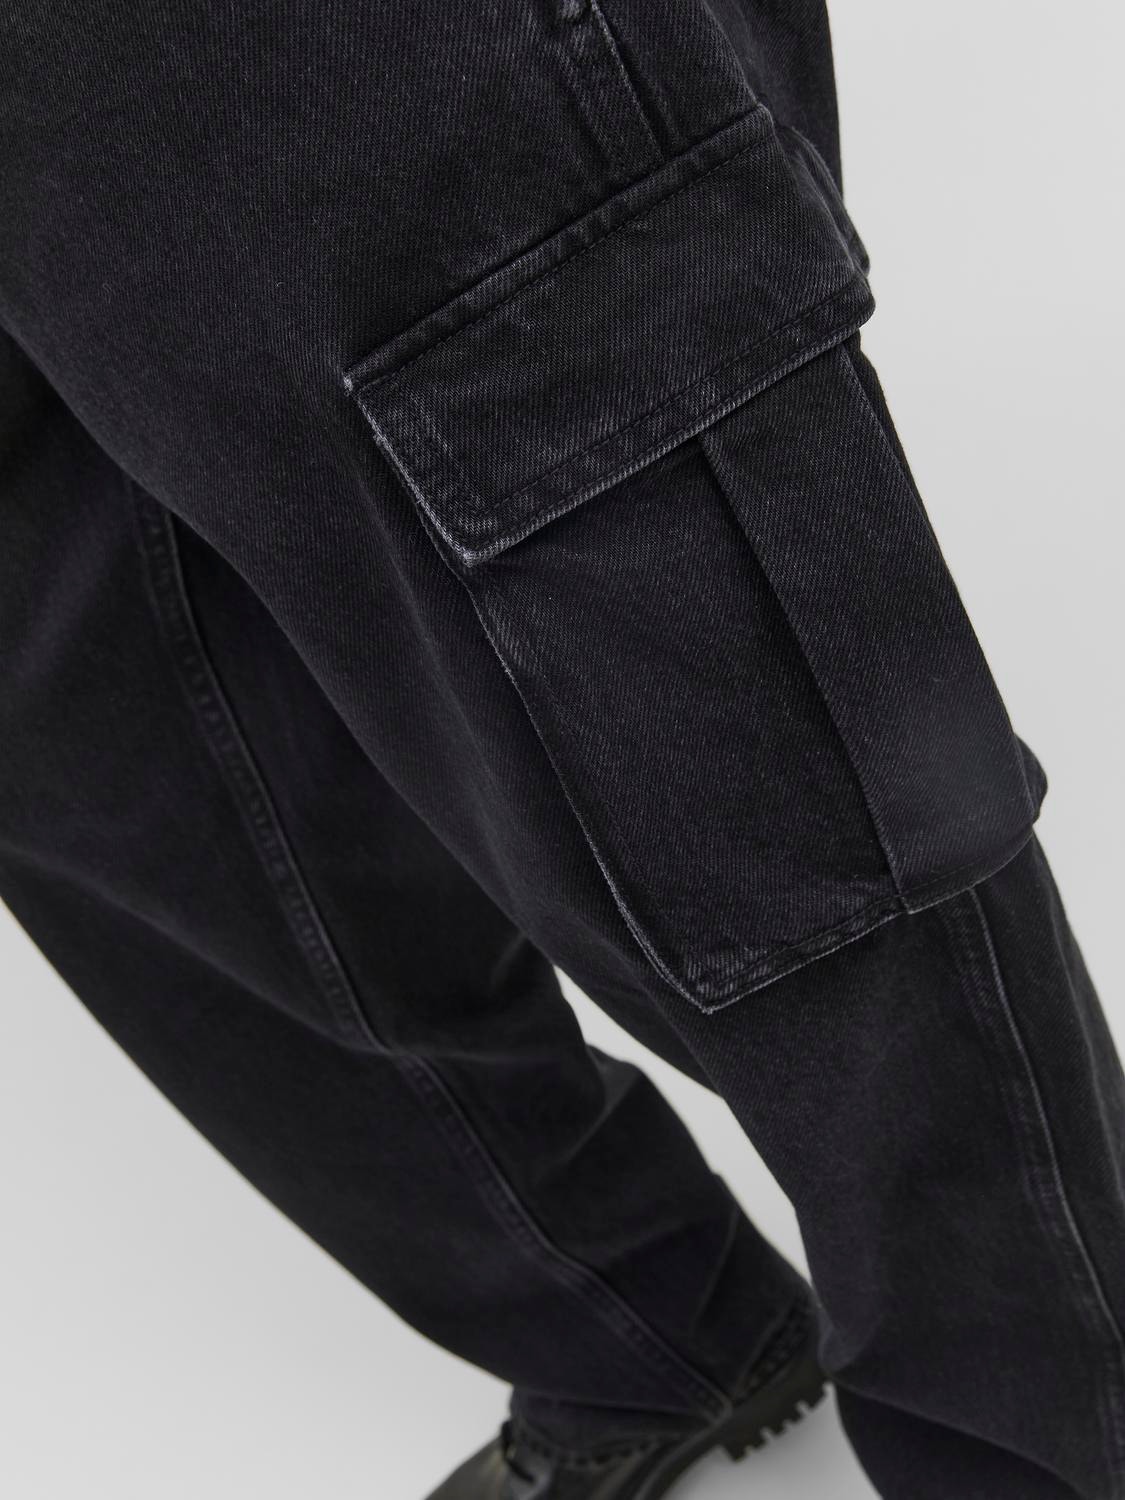 Jack & Jones JJIALEX JJCARGO SBD 312 Jeans baggy fit -Black Denim - 12242154